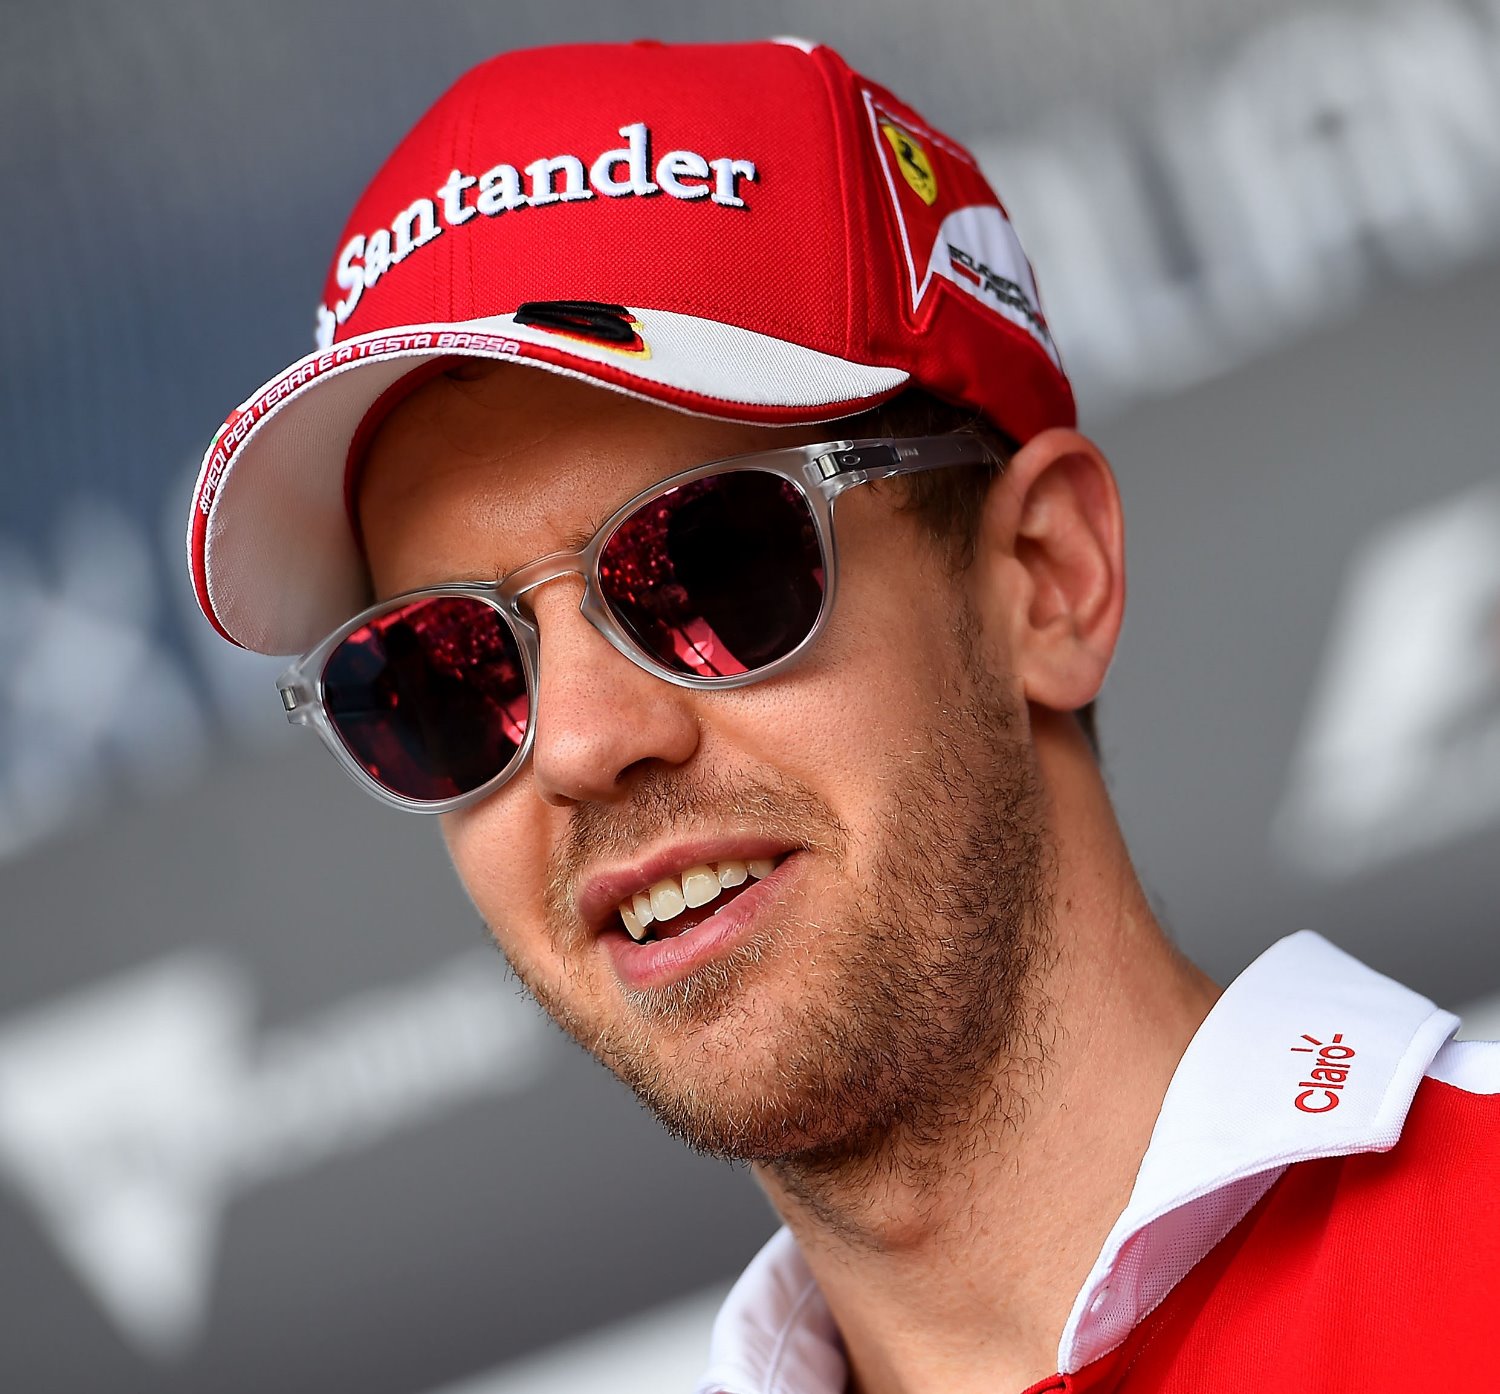 Vettel does not consider himself a hero